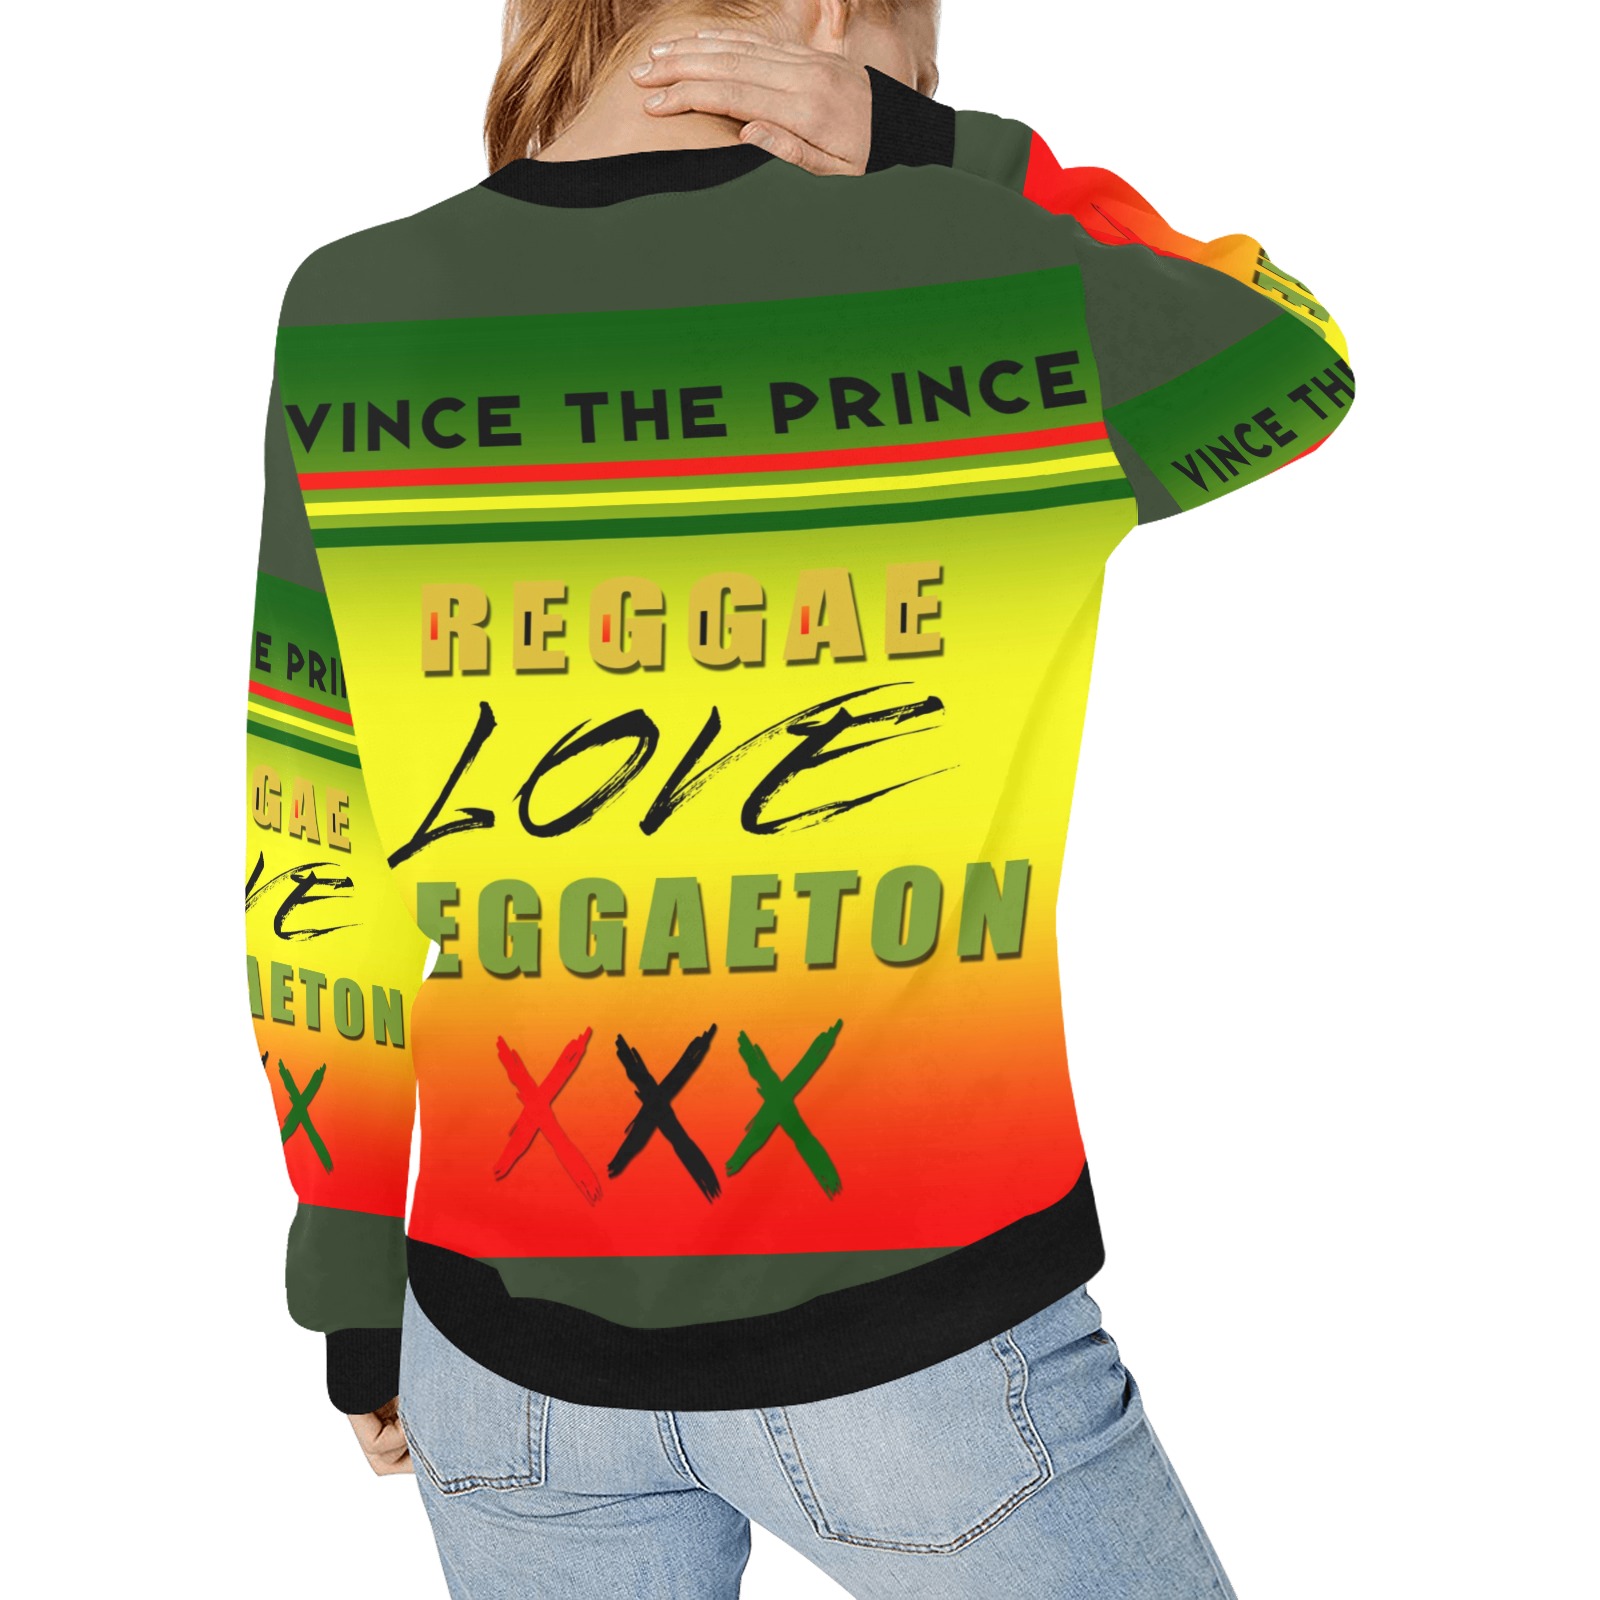 VTP Reggae Love Reggaeton 12 Women's Rib Cuff Crew Neck Sweatshirt (Model H34)